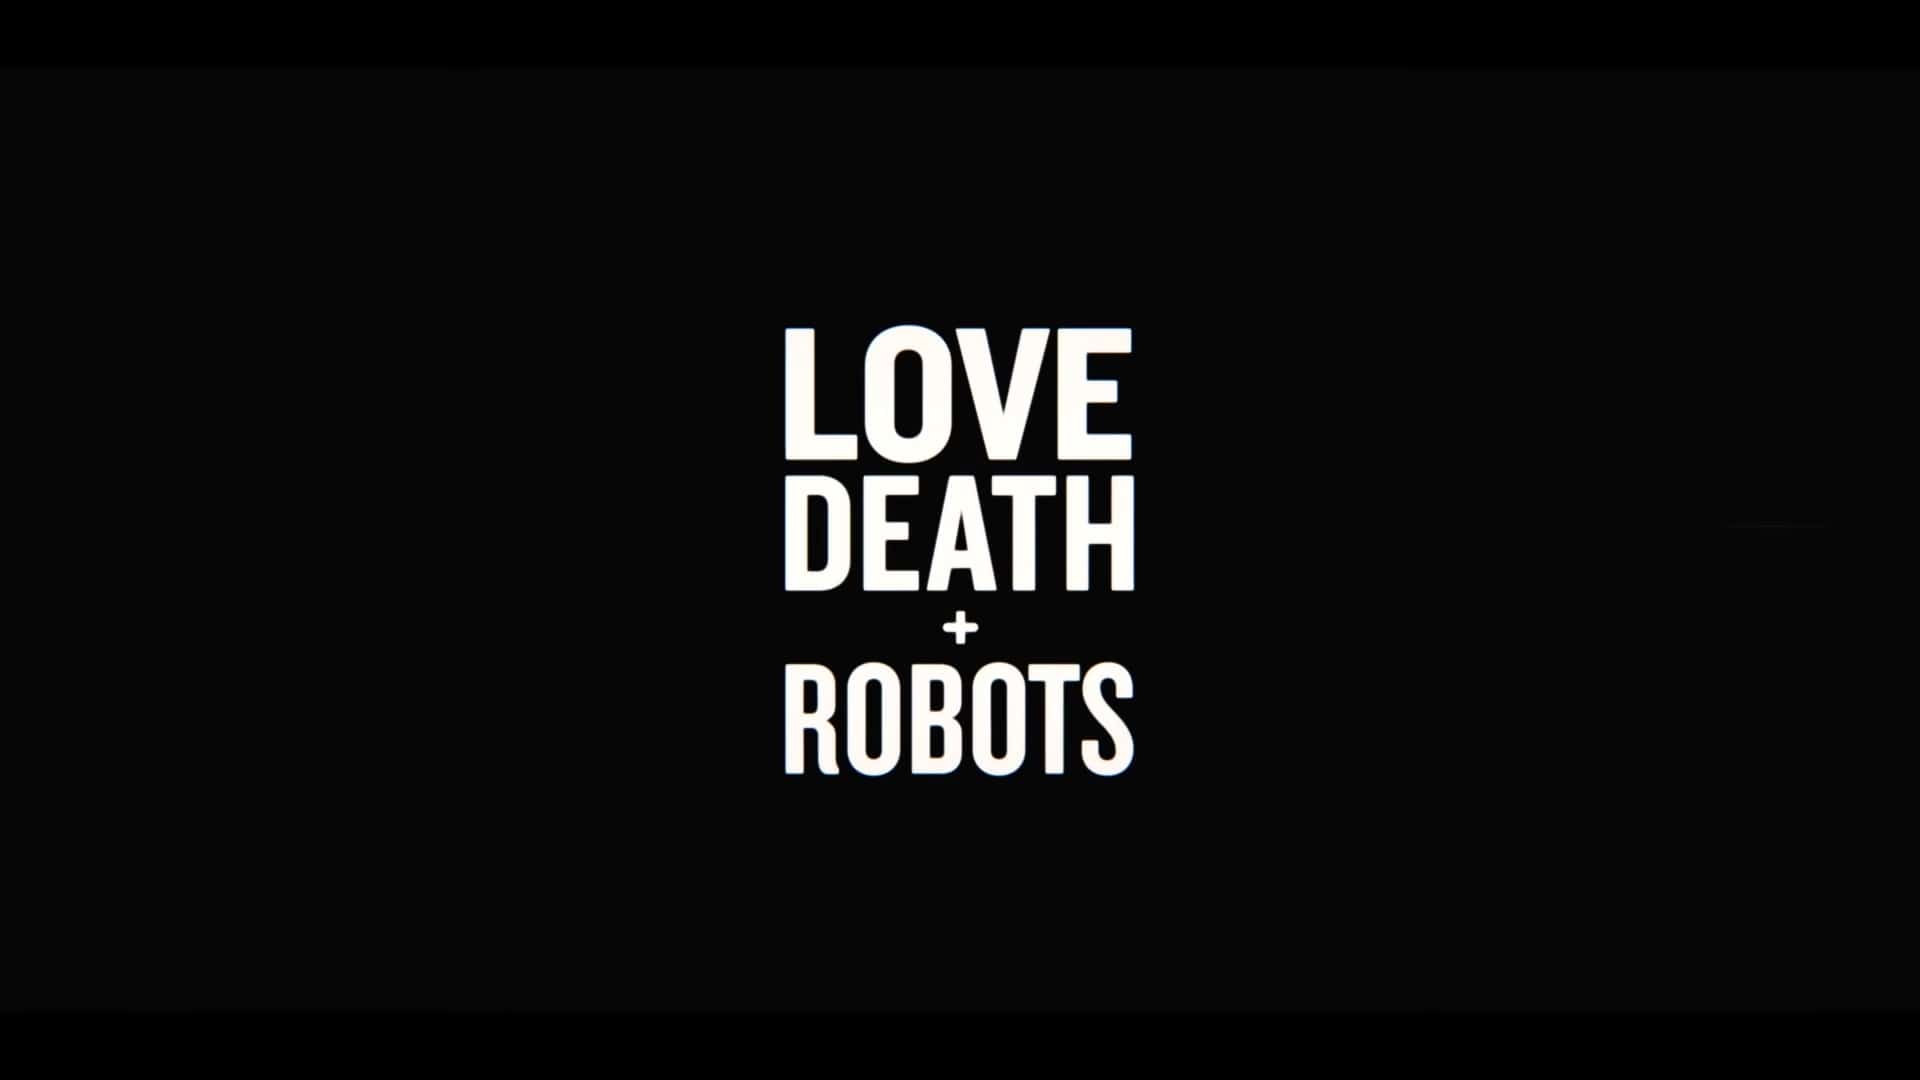 LOVE DEATH + ROBOT ซีรีส์รวมอนิเมชันสั้นสุดคูล งานภาพตระการตา 3